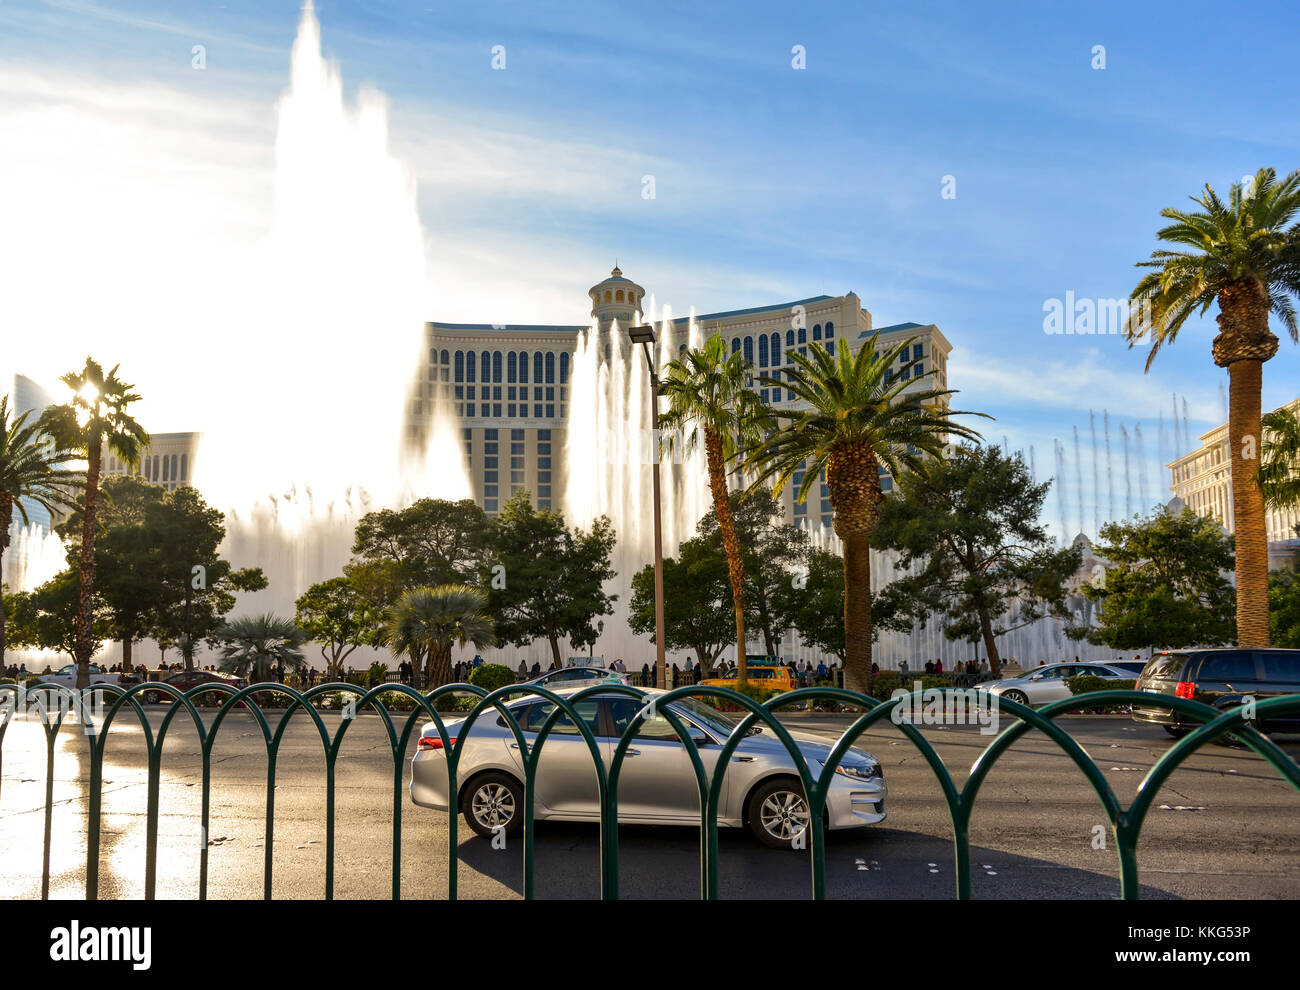 The Bellagio fountain seen from across Las Vegas boulevard on the Las Vegas Strip Stock Photo